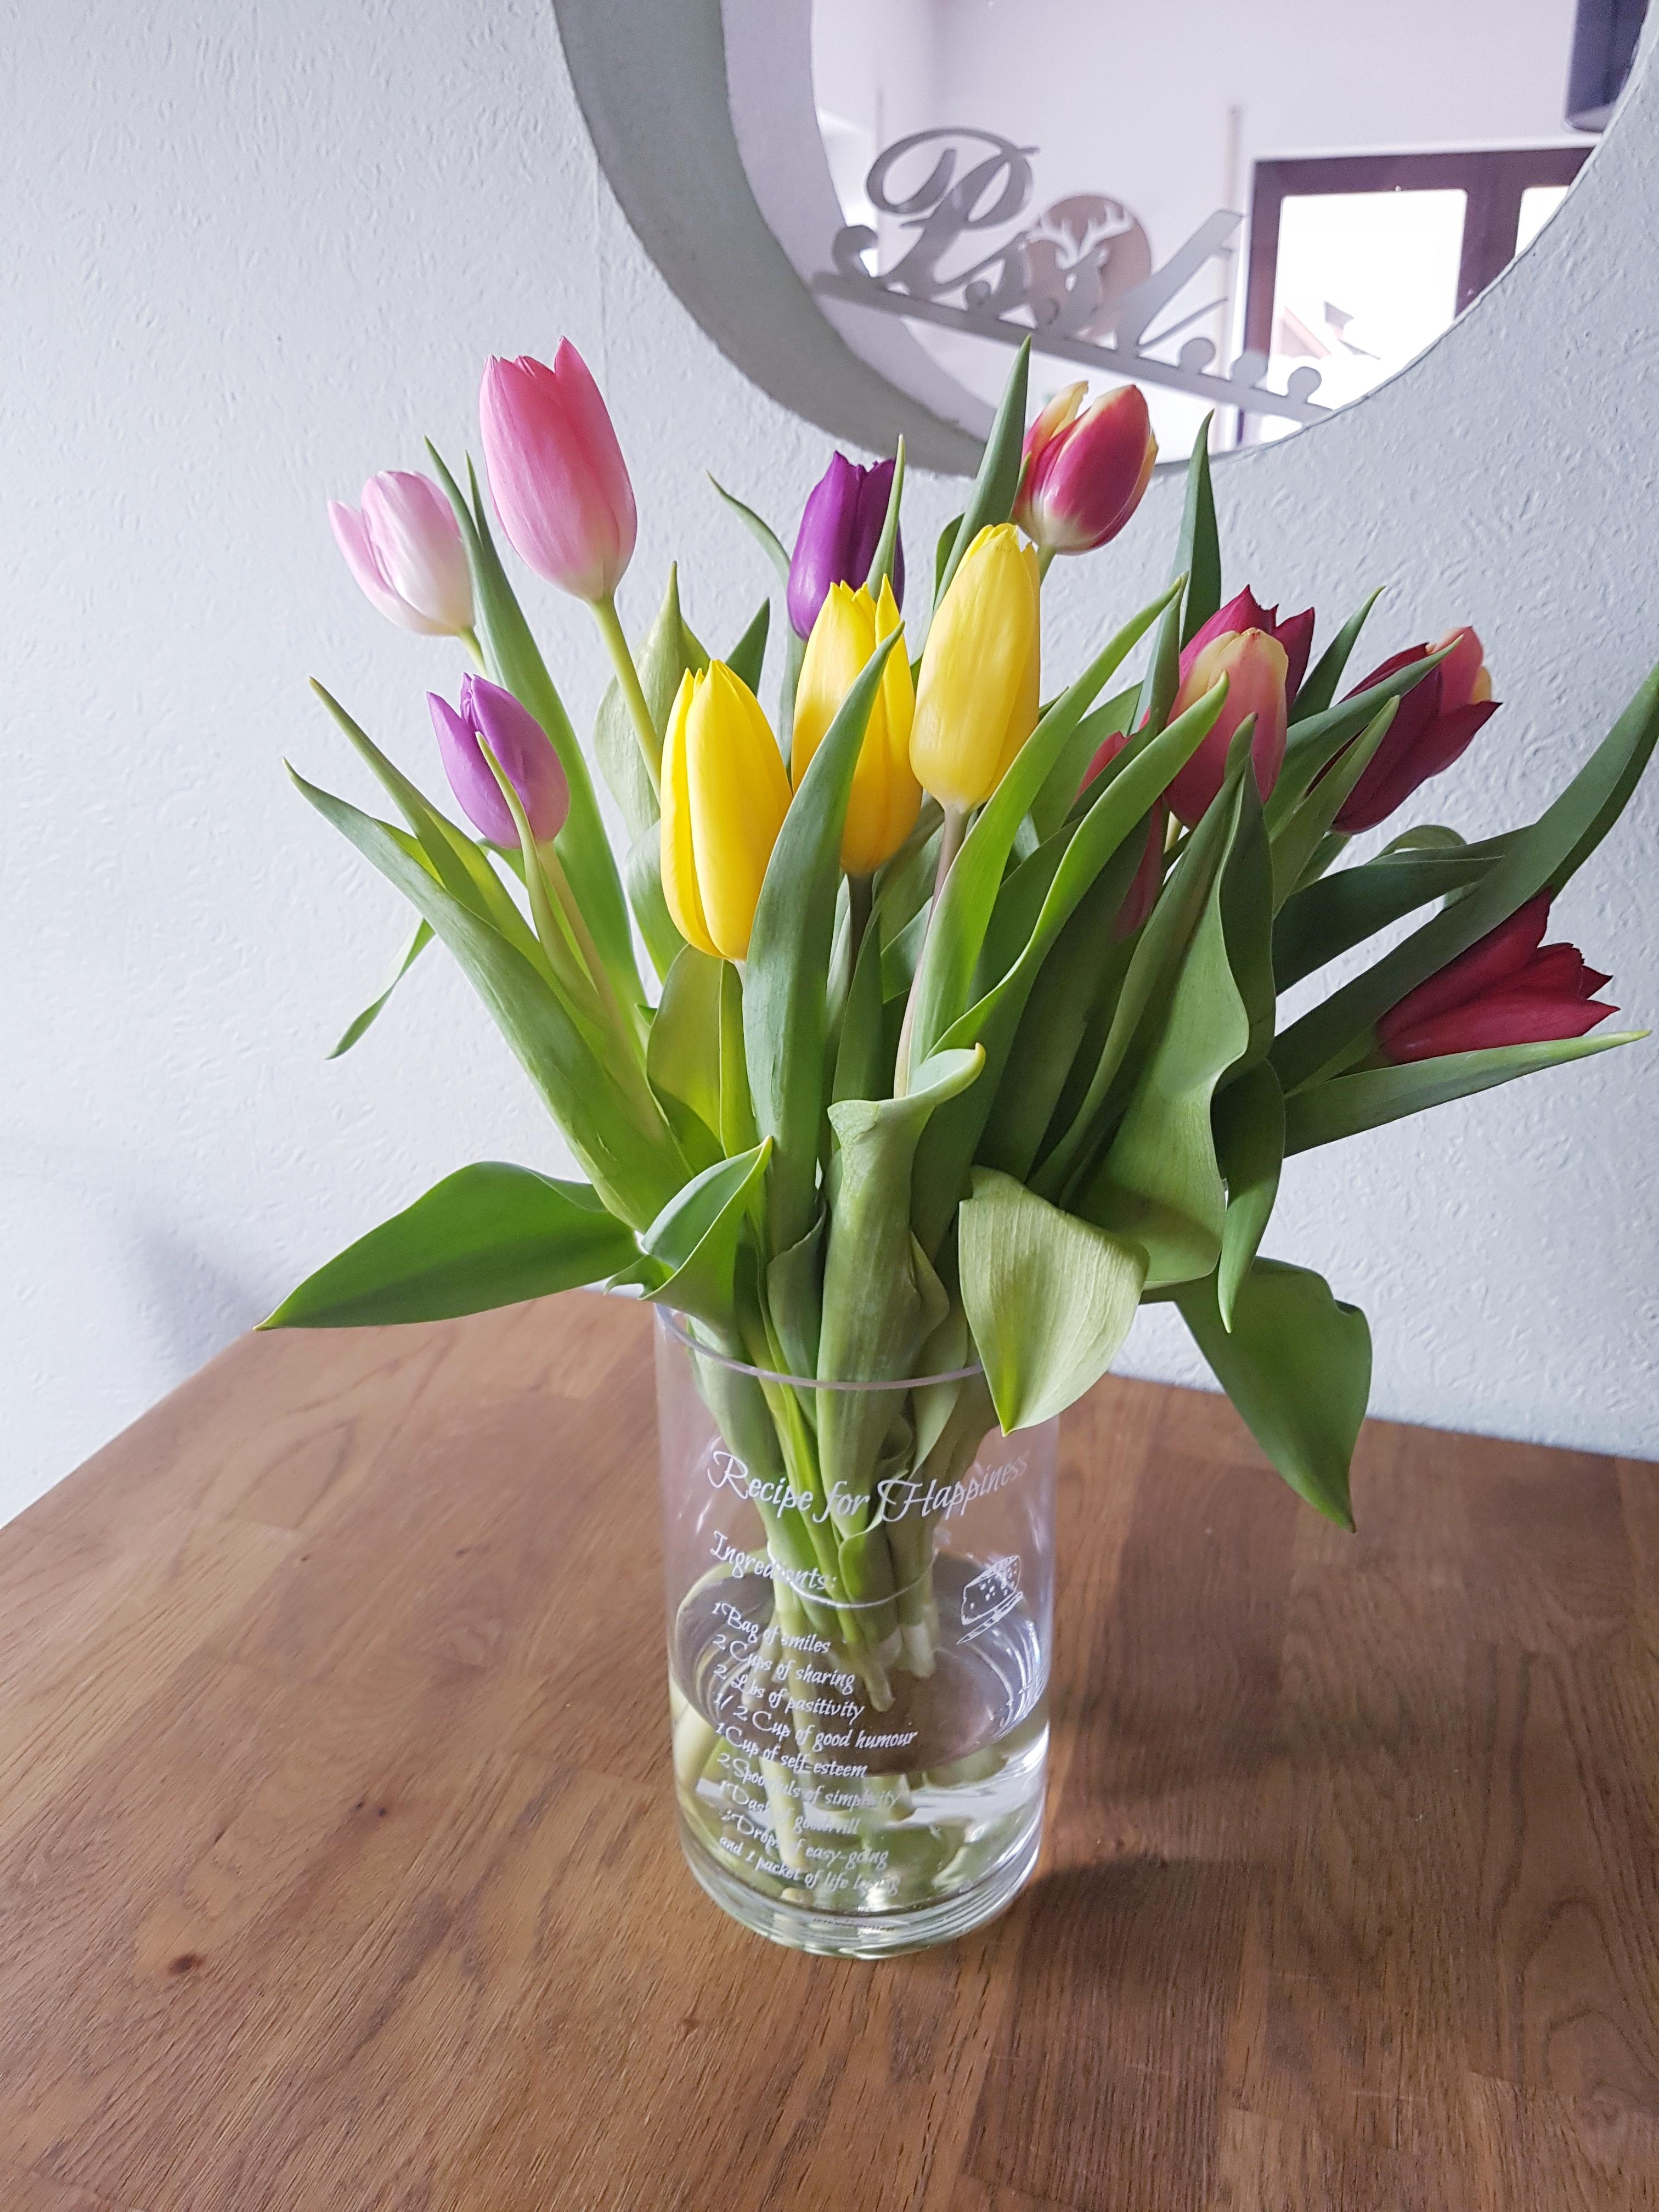 Frühlingsreif...🌷

#livingchallenge#freshflowerfriday #tulpen#frischeblumen#flowers